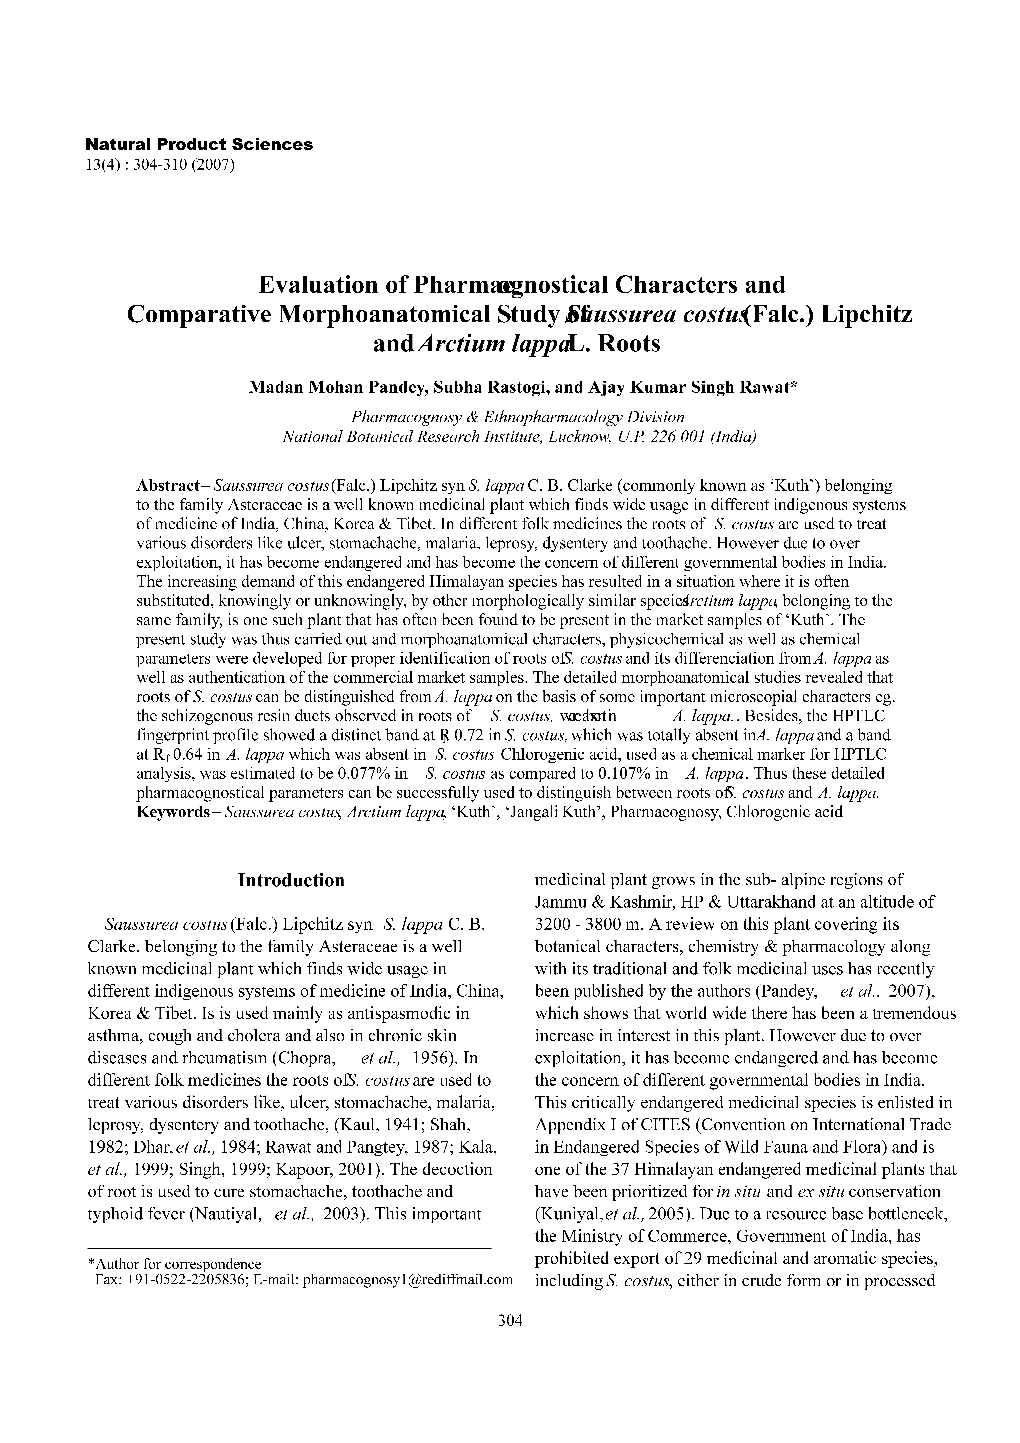 Evaluation of Pharmacognostical Characters and Comparative Morphoanatomical Study of Saussurea Costus (Falc.) Lipchitz and Arctium Lappa L